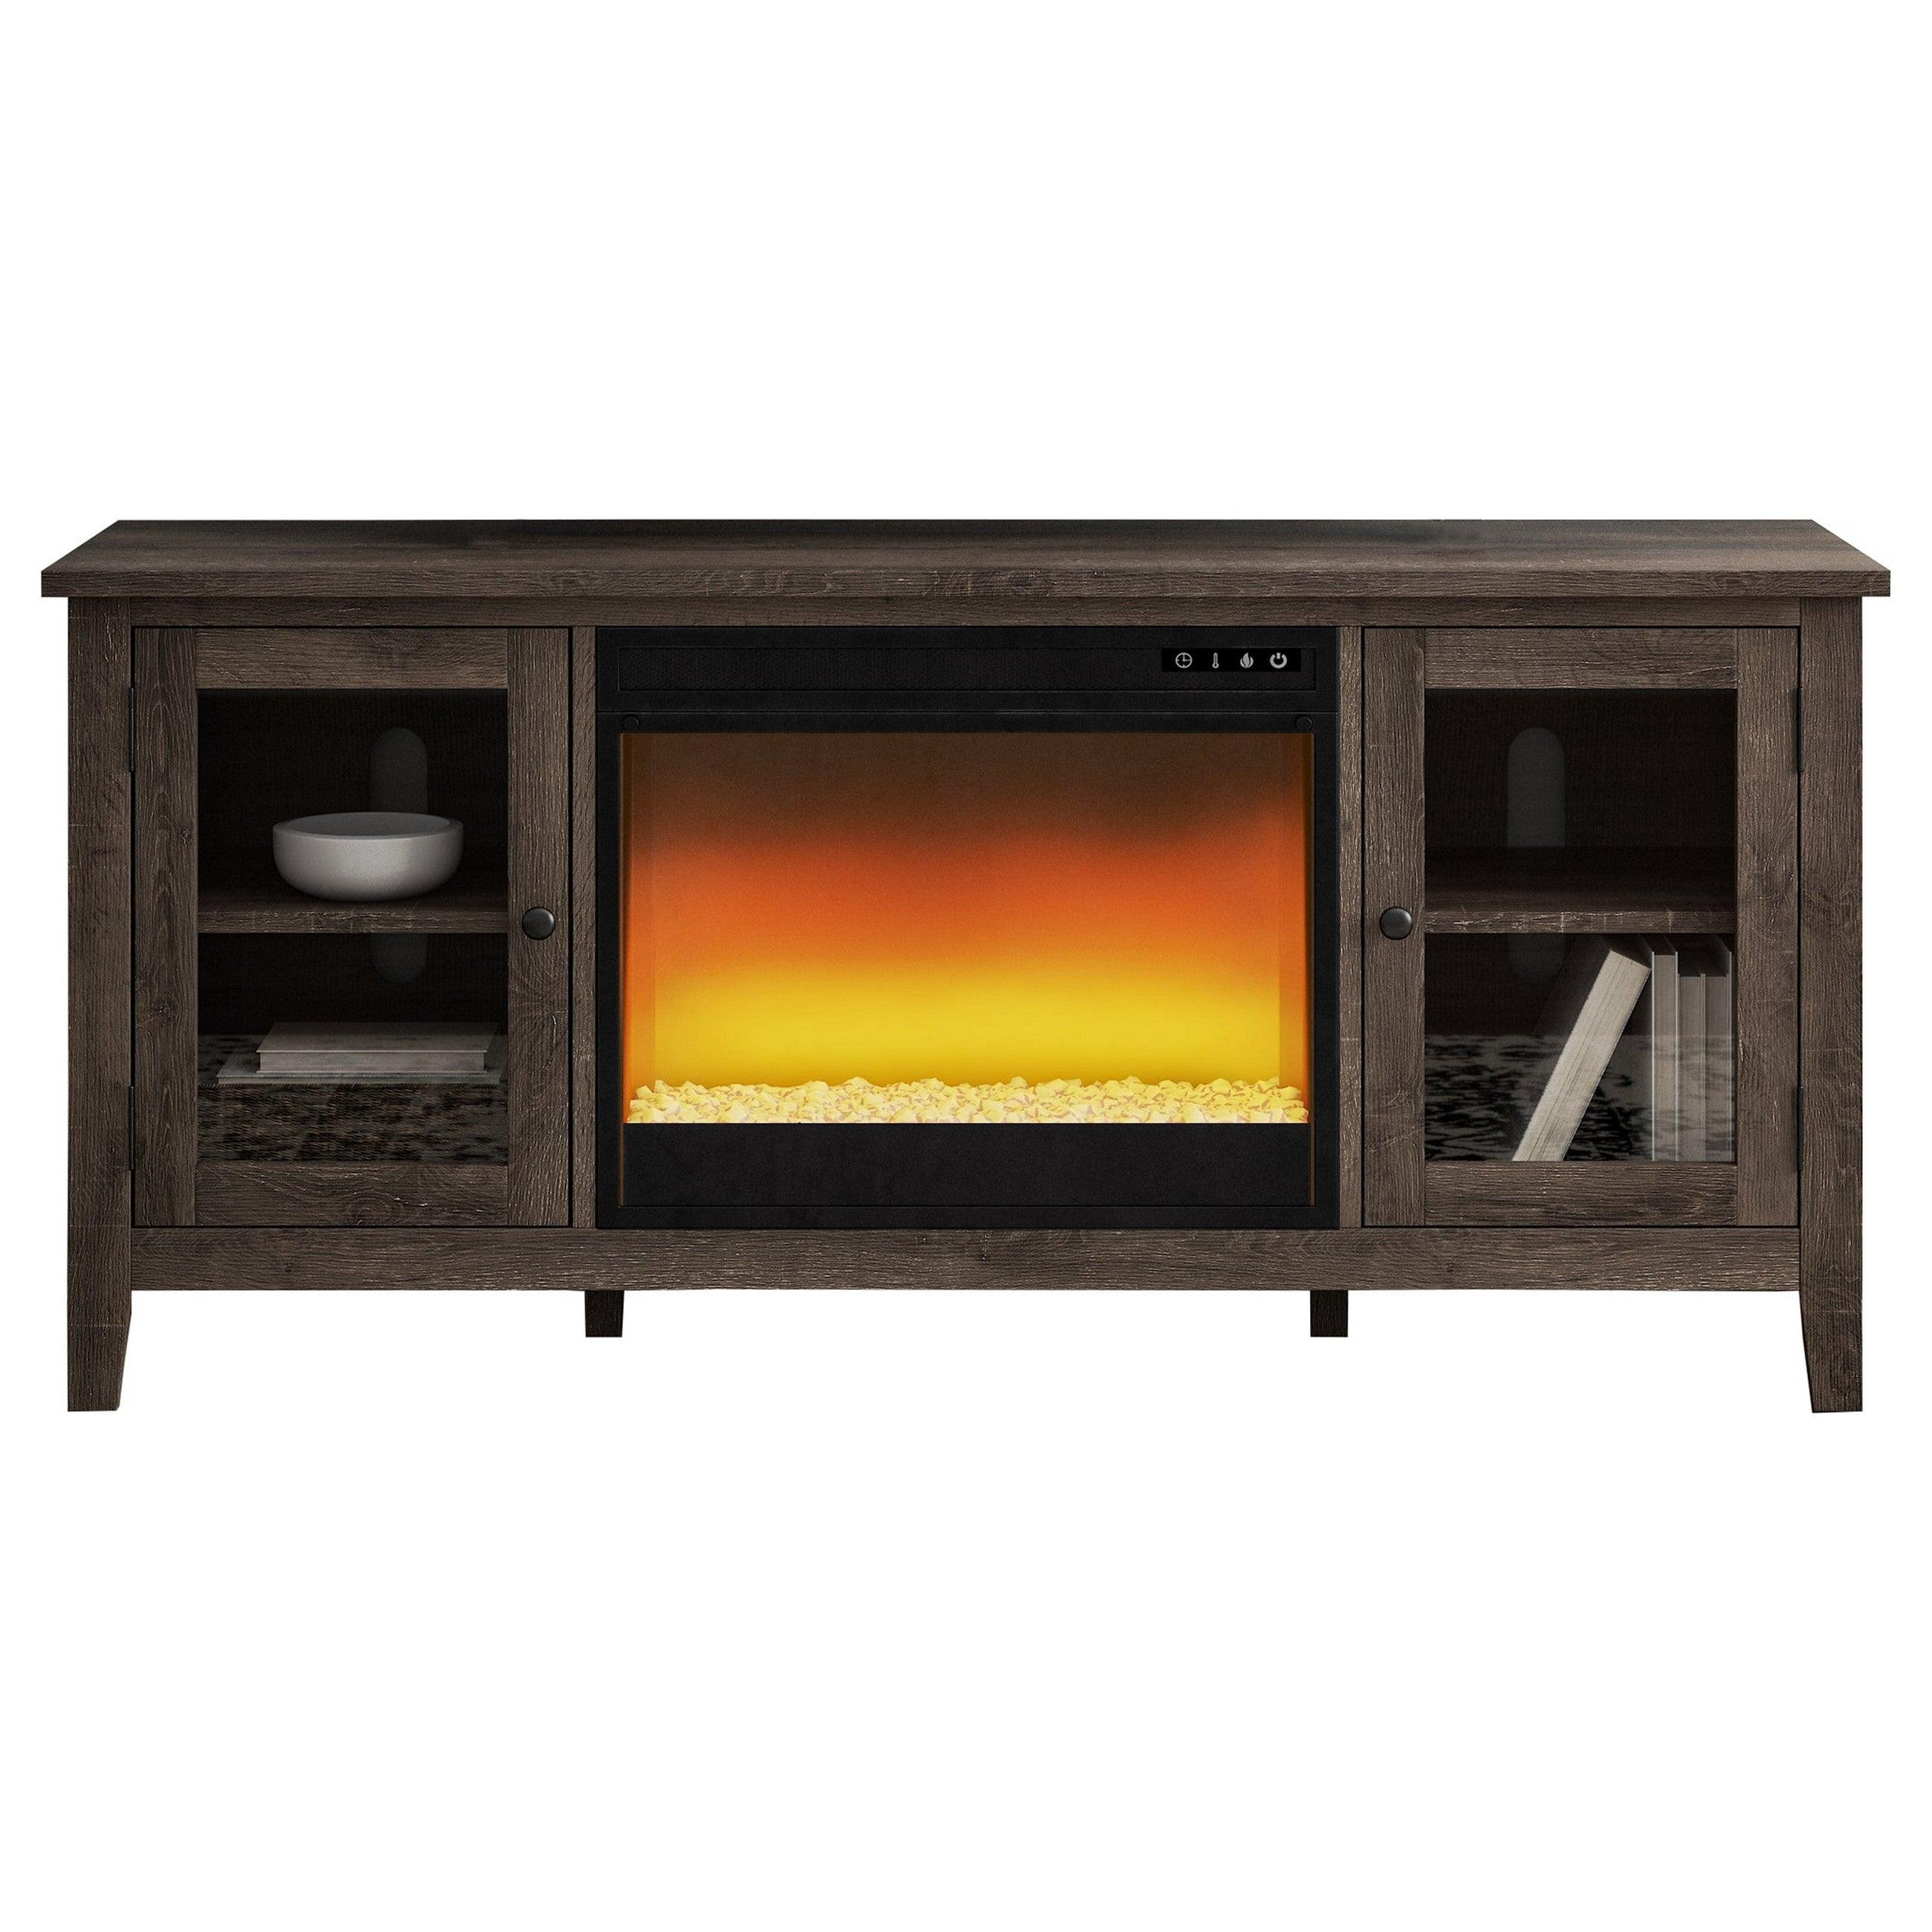 W283-68 - MUEBLE TV 60 PULGADAS CON CHIMENEA – Serra Furniture